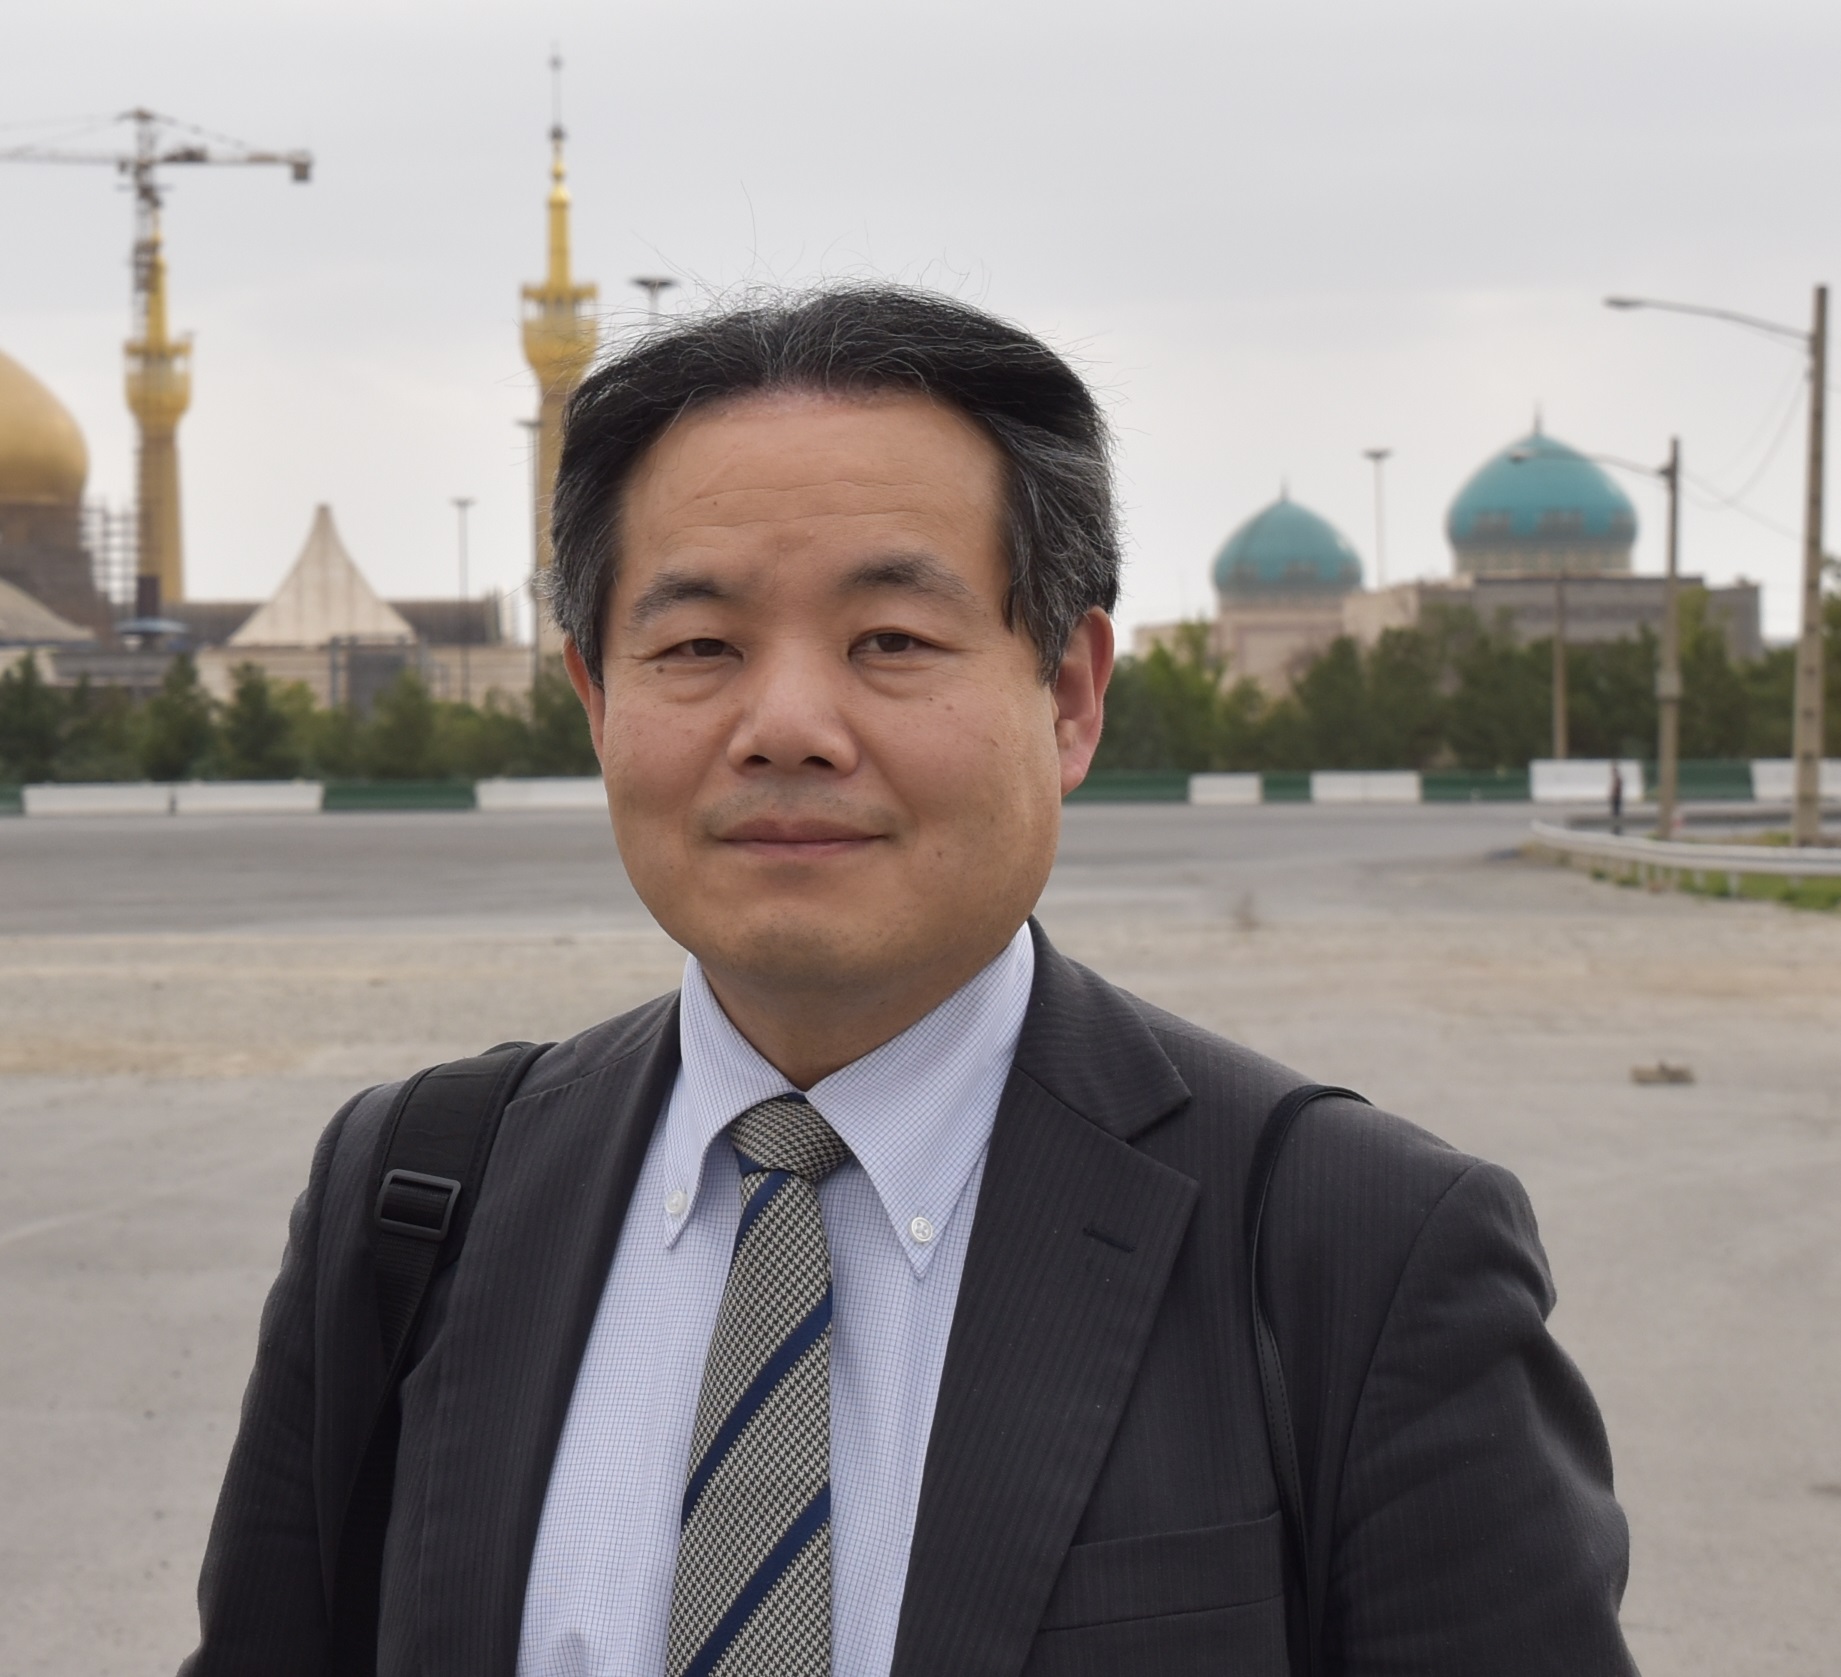 Interview with an international symposium panelist Part 1: Mr. Nobuhisa Degawa, NHK Senior Commentator